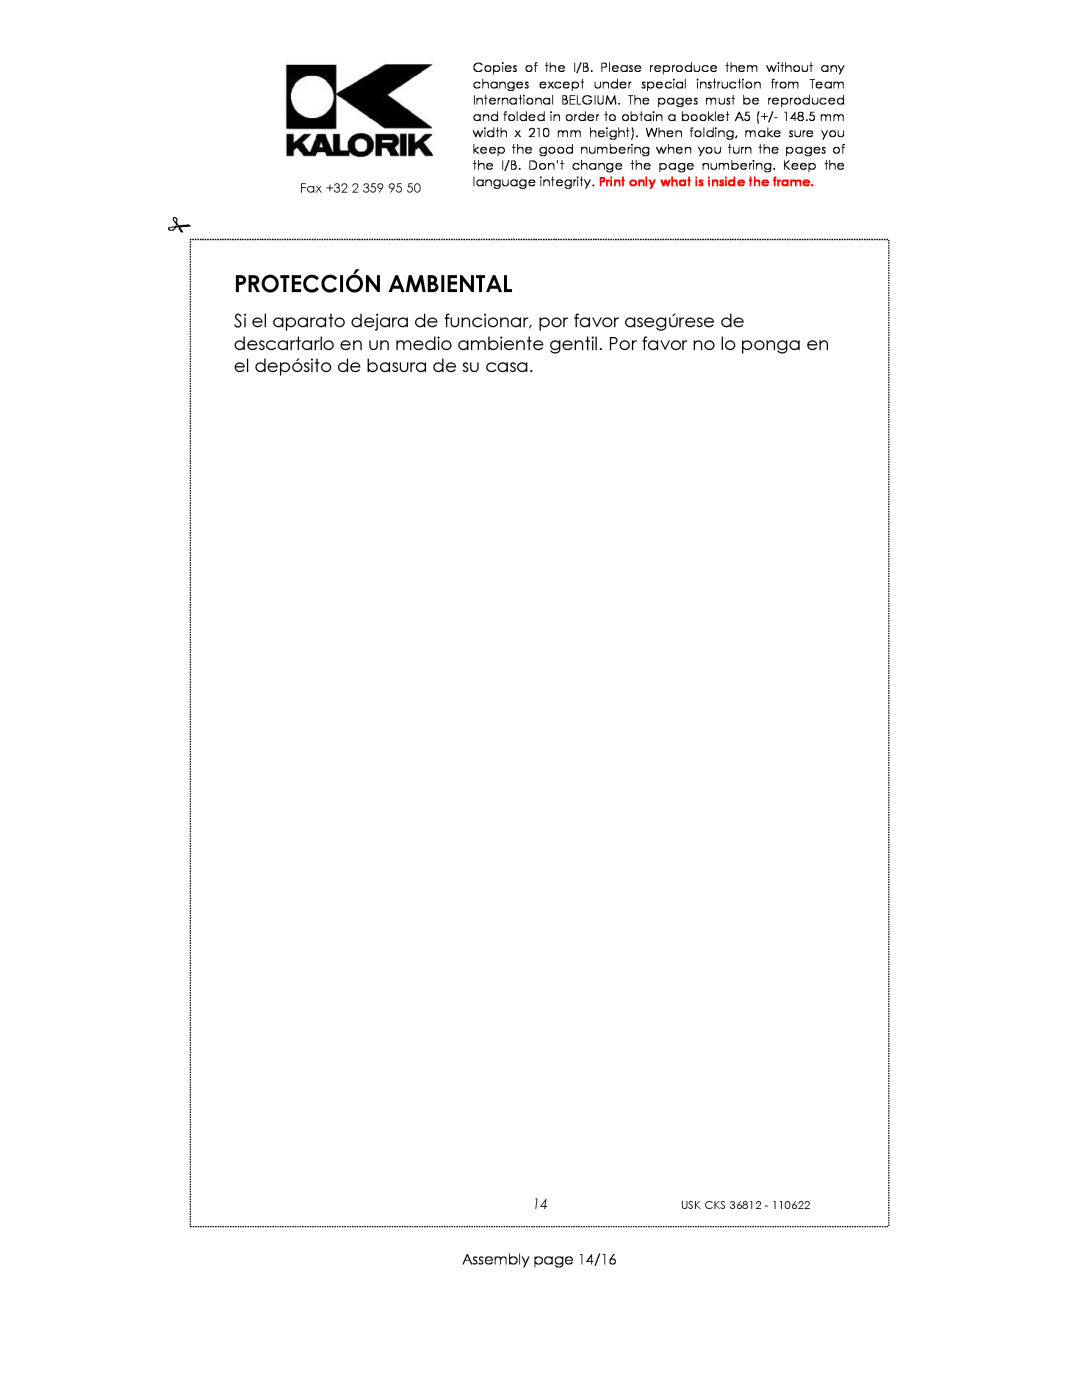 Kalorik USK CKS 36812 manual Protección Ambiental, Assembly page 14/16 